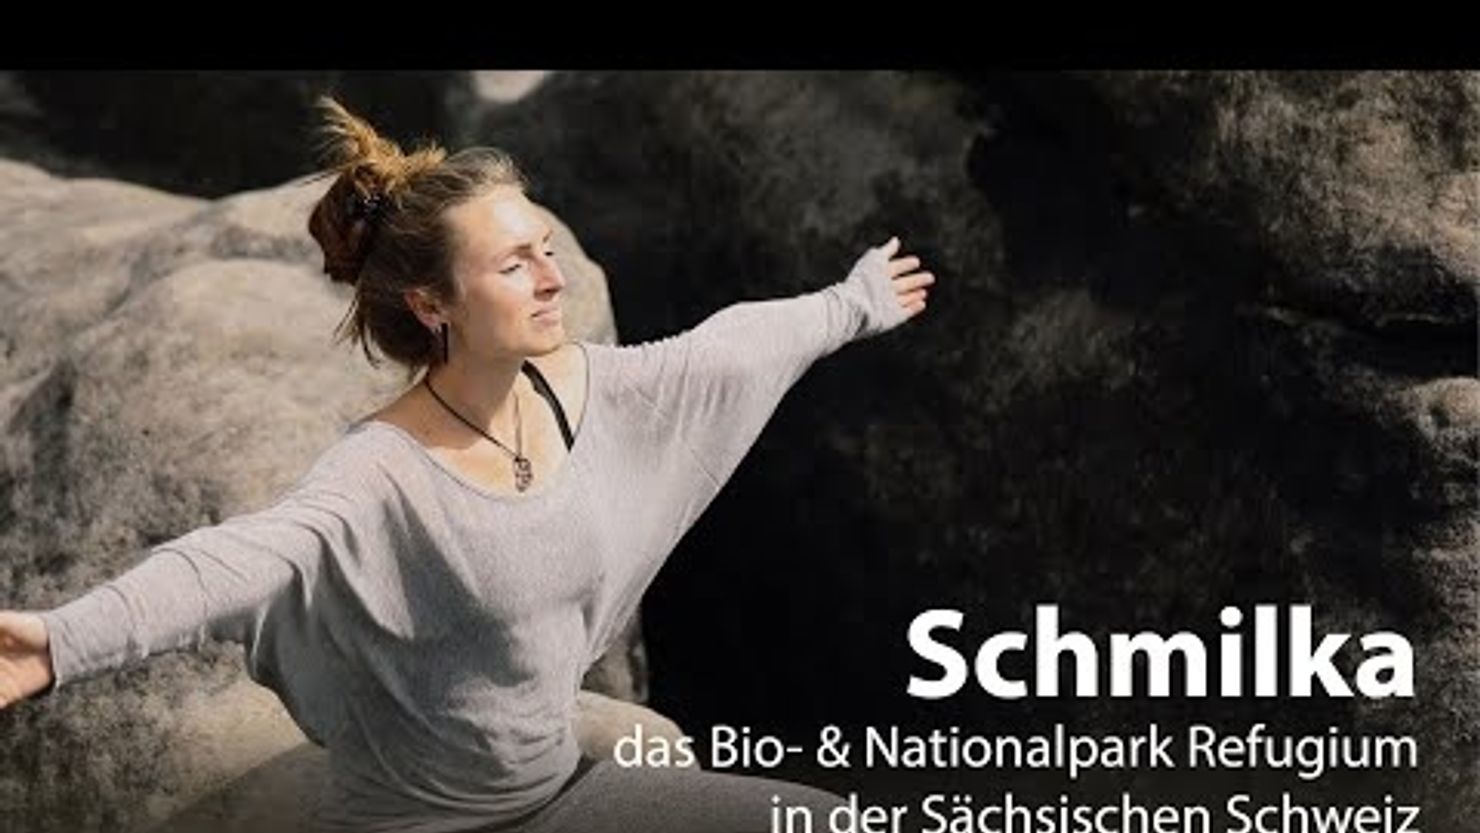 Video: Bio- & Nationalpark Refugium Schmilka: Imagevideo Refugium